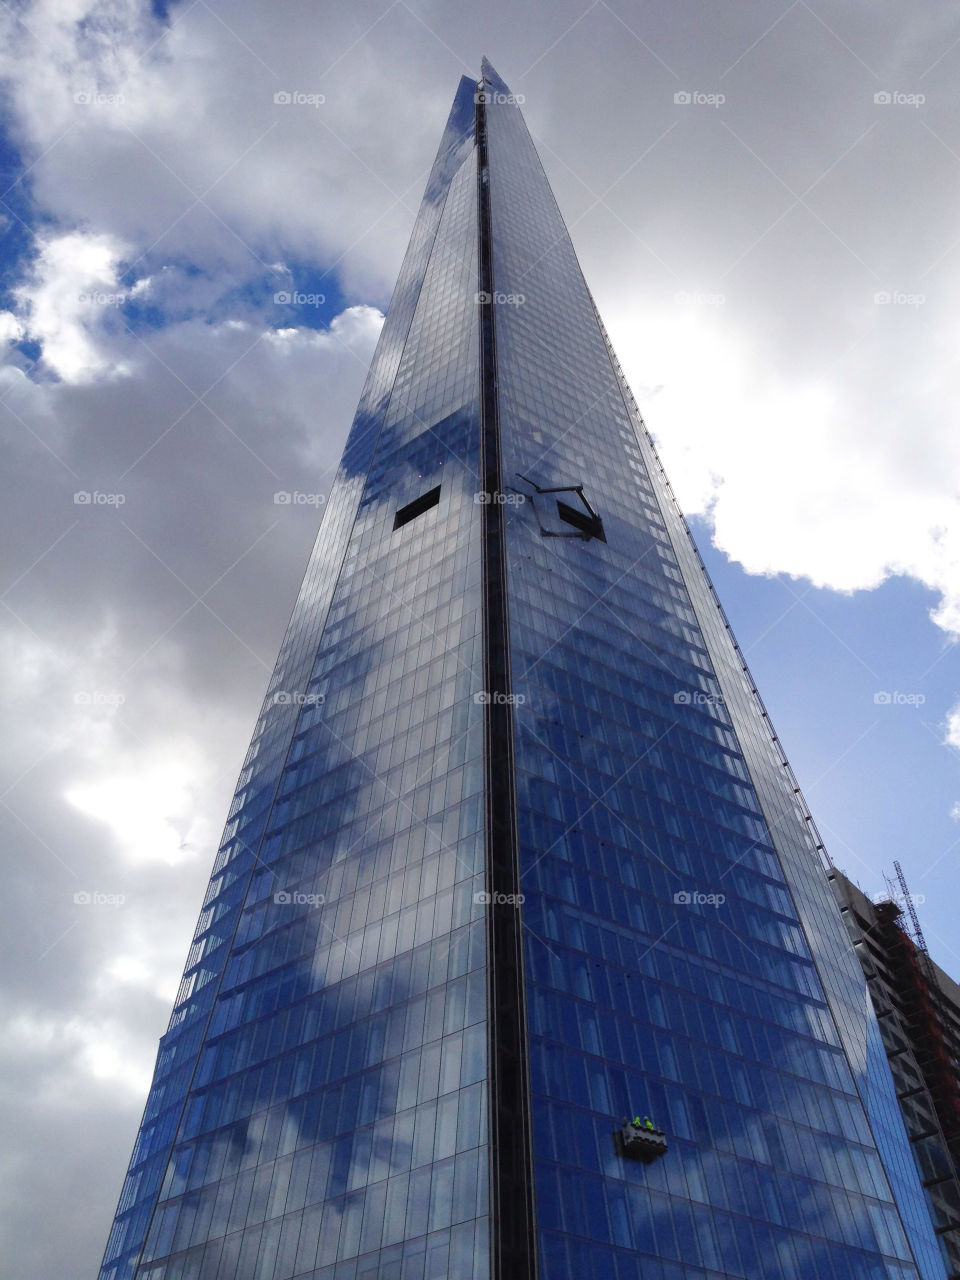 the glass london united kingdom by grwiffen